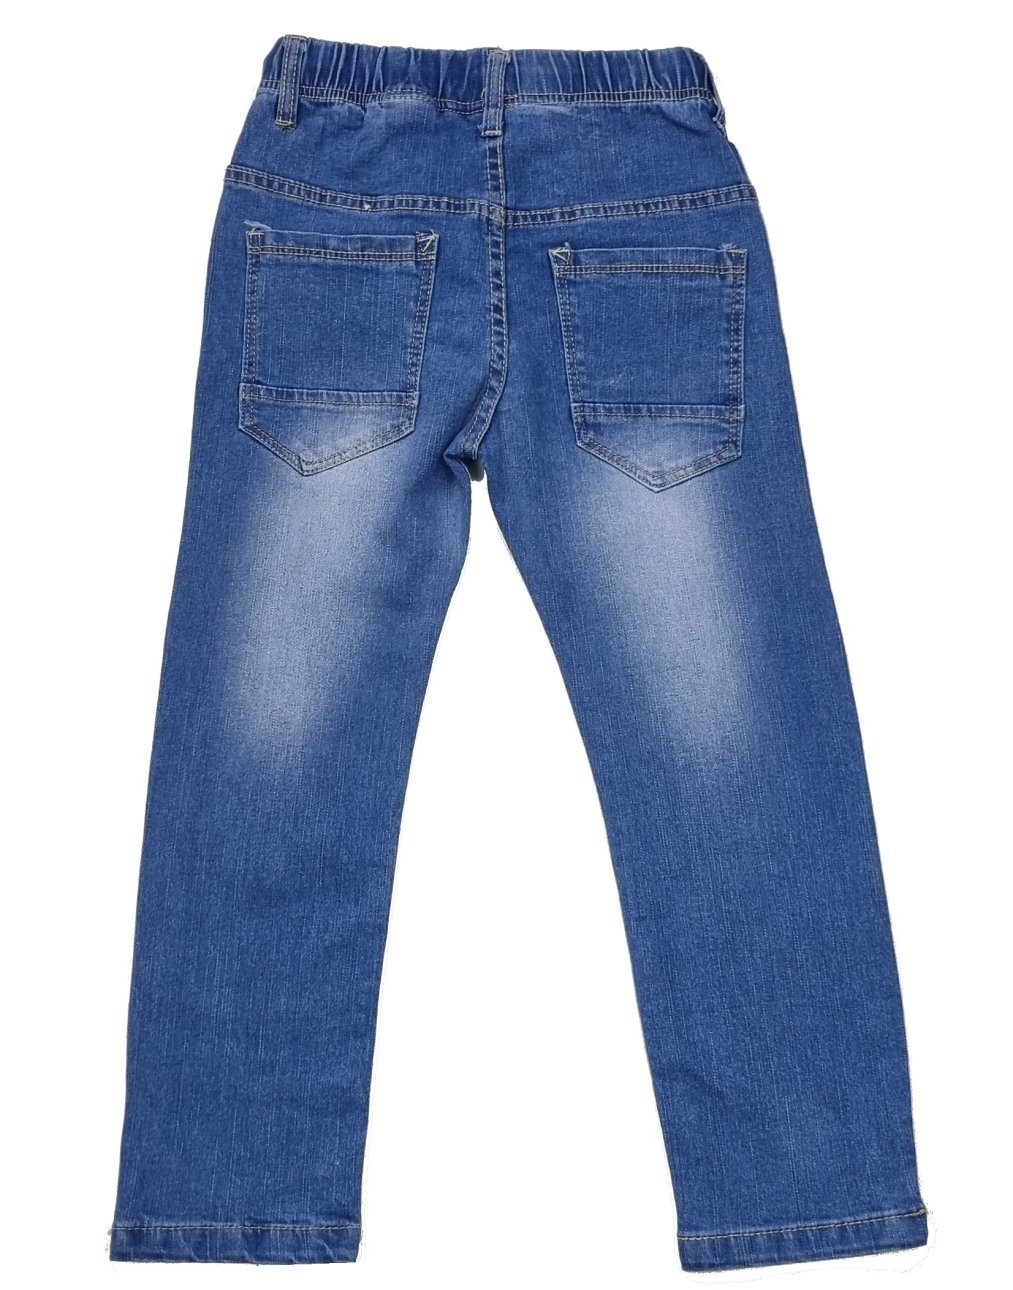 Fashion Boy Bequeme Jeans Jungen Jeans Hose mit Stretch Stretch-Jeans, J25s